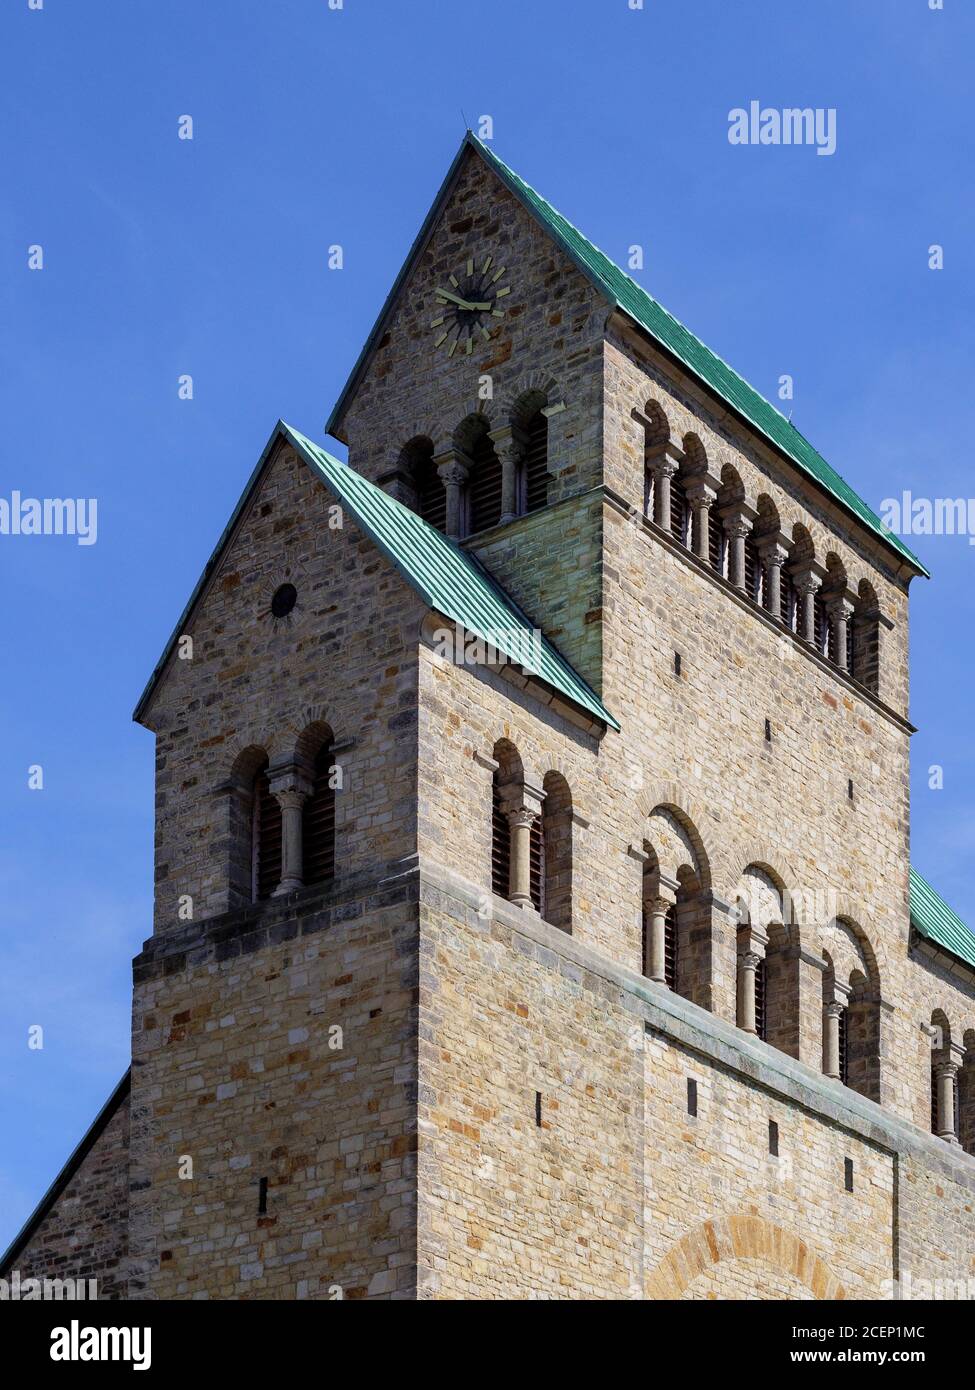 Mariendom, Hildesheim, Niedersachsen, Deutschland, Europa, UNESCO Weltkulturerbe Catedral de Santa María Hildesheim, Baja Sajonia, Alemania, Europa, UNES Foto de stock